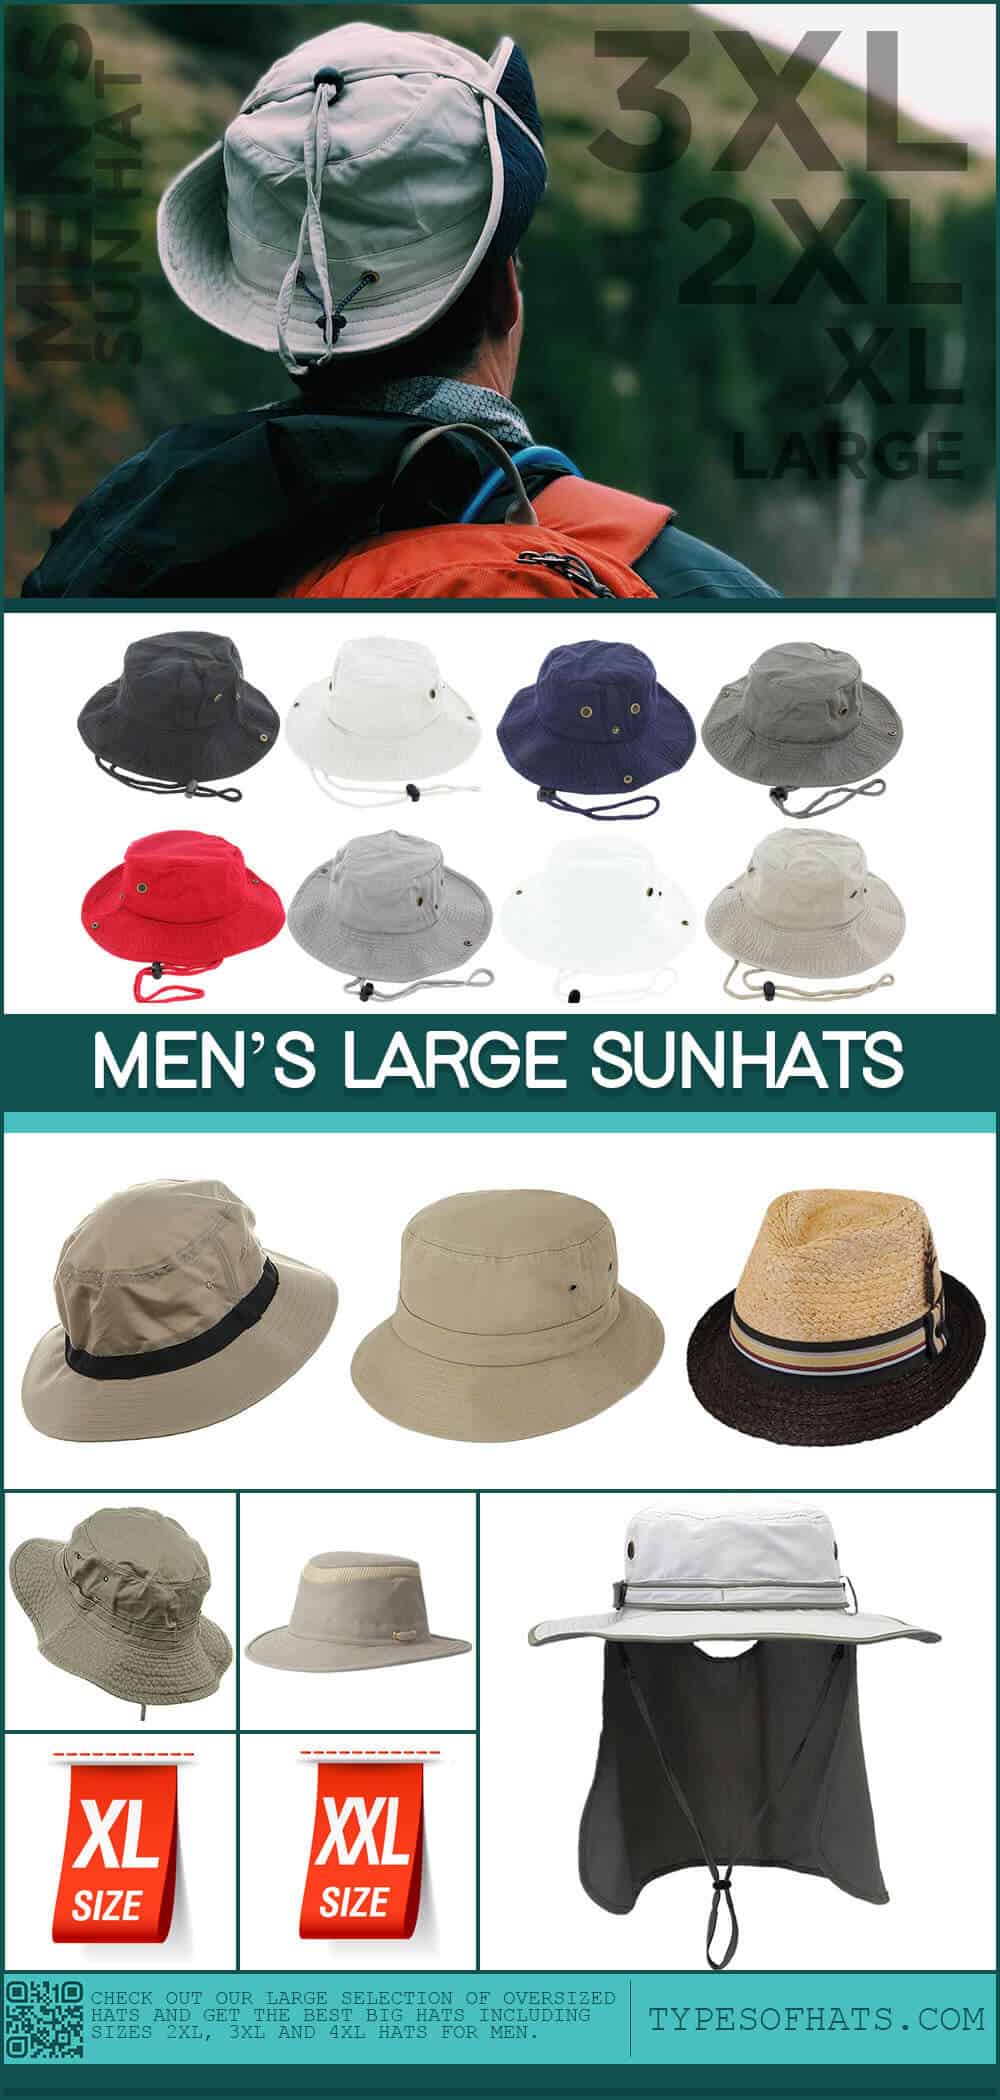 Large Sunhats for Men